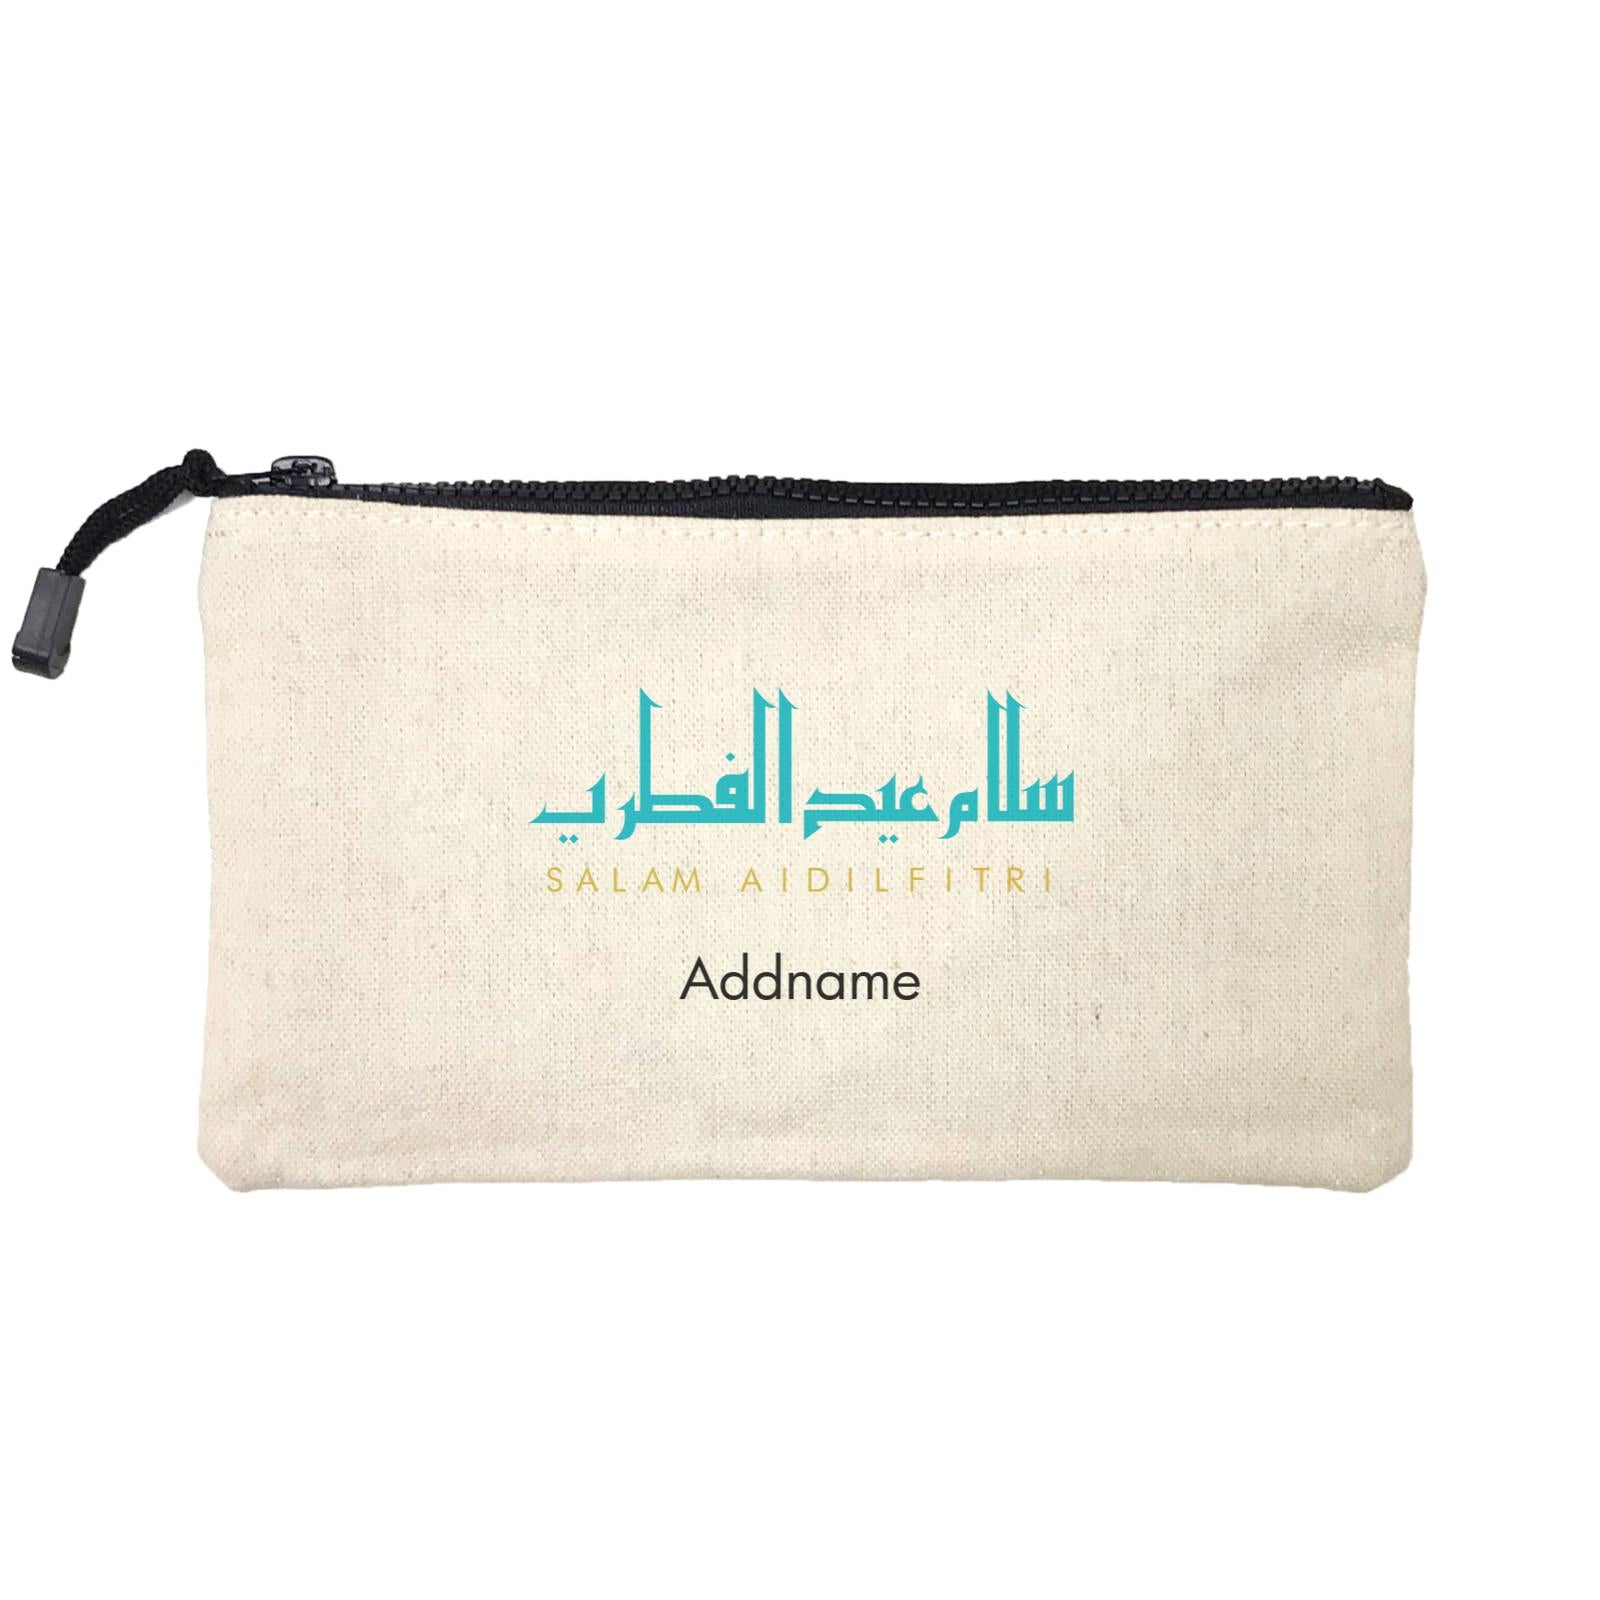 Salam Aidilfitri Jawi Typography Mini Accessories Stationery Pouch